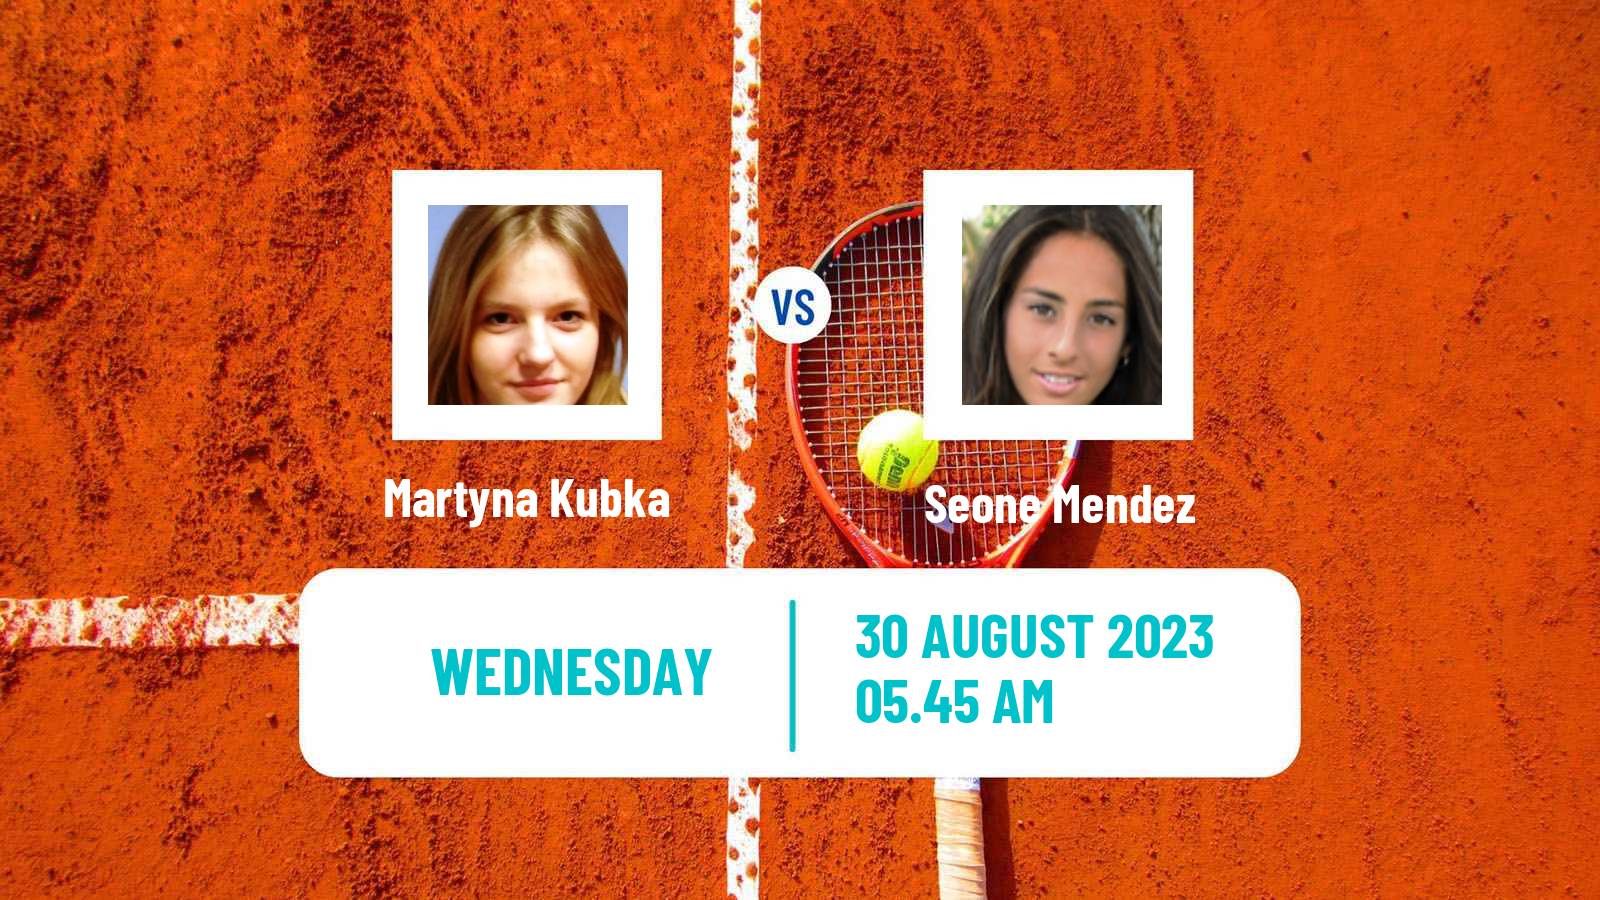 Tennis ITF W60 Prague 2 Women Martyna Kubka - Seone Mendez